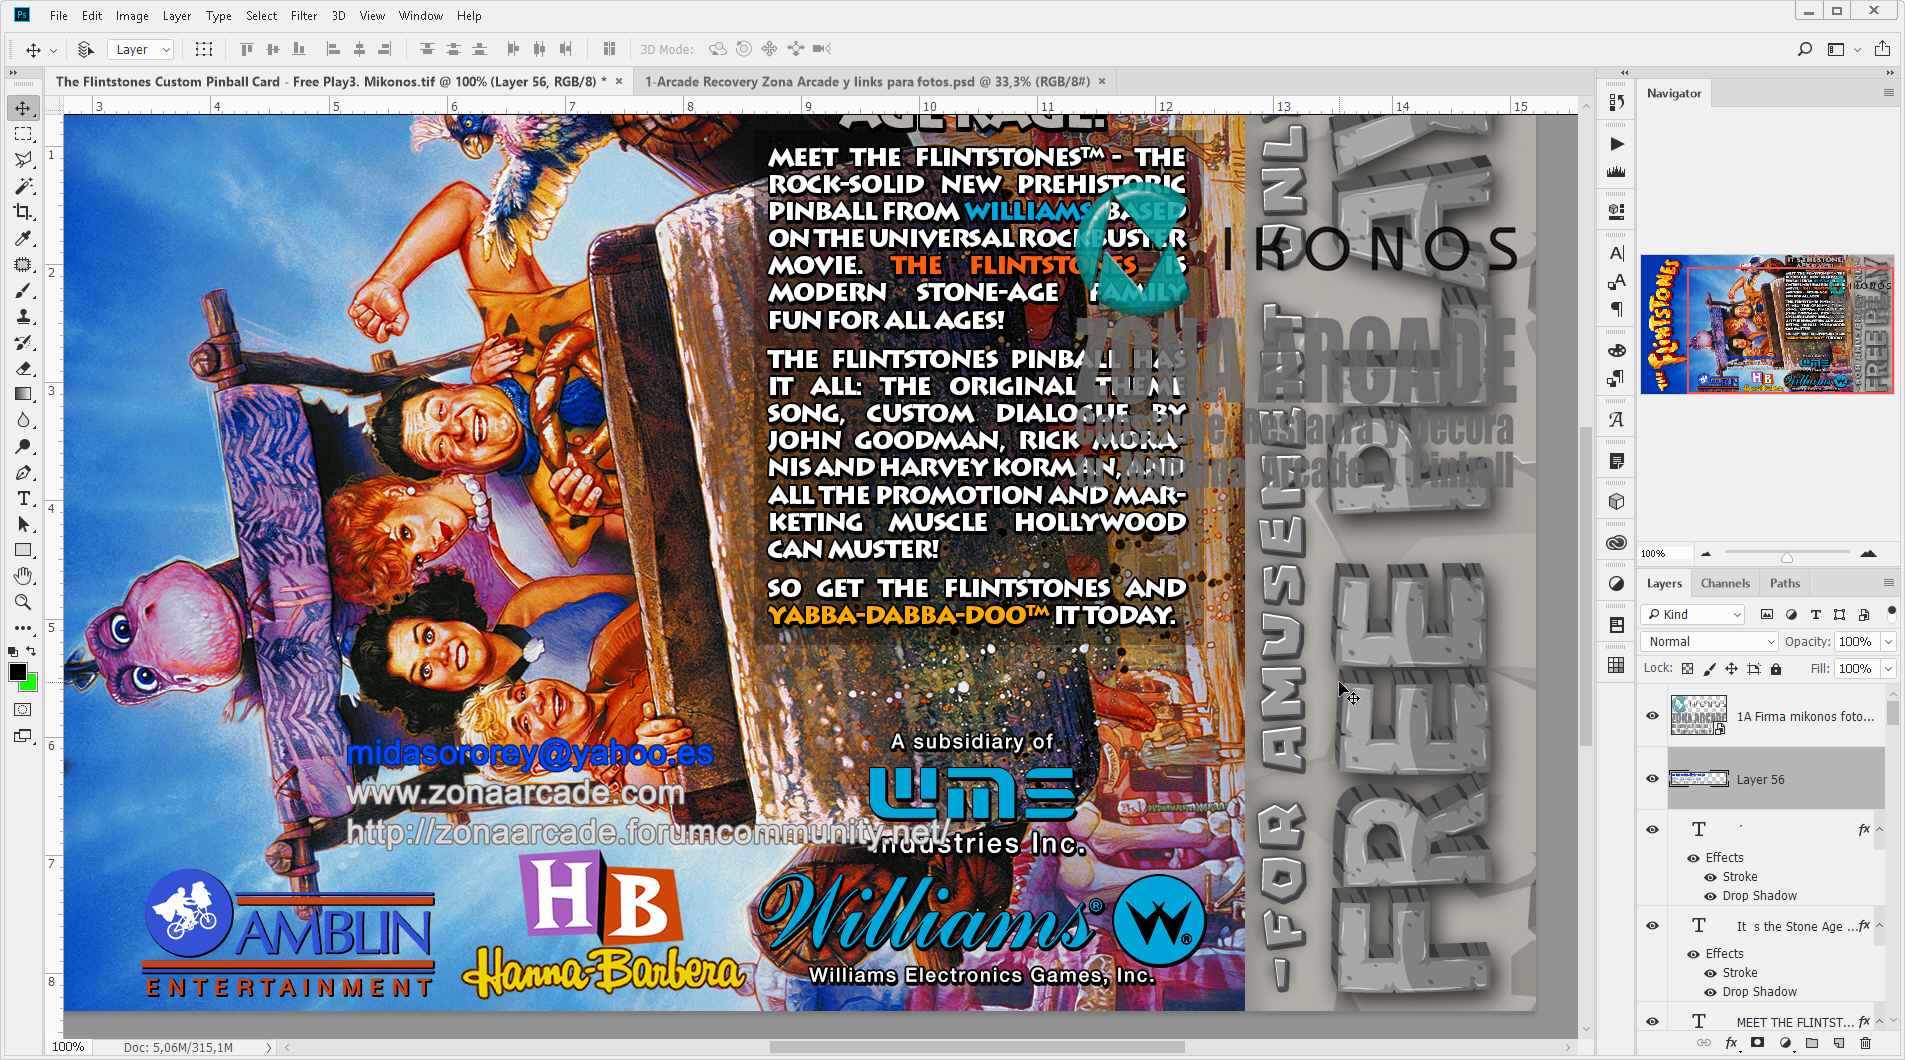 The-Flintstones-Custom-Pinball-Cards-Free-Play3-Mikonos2